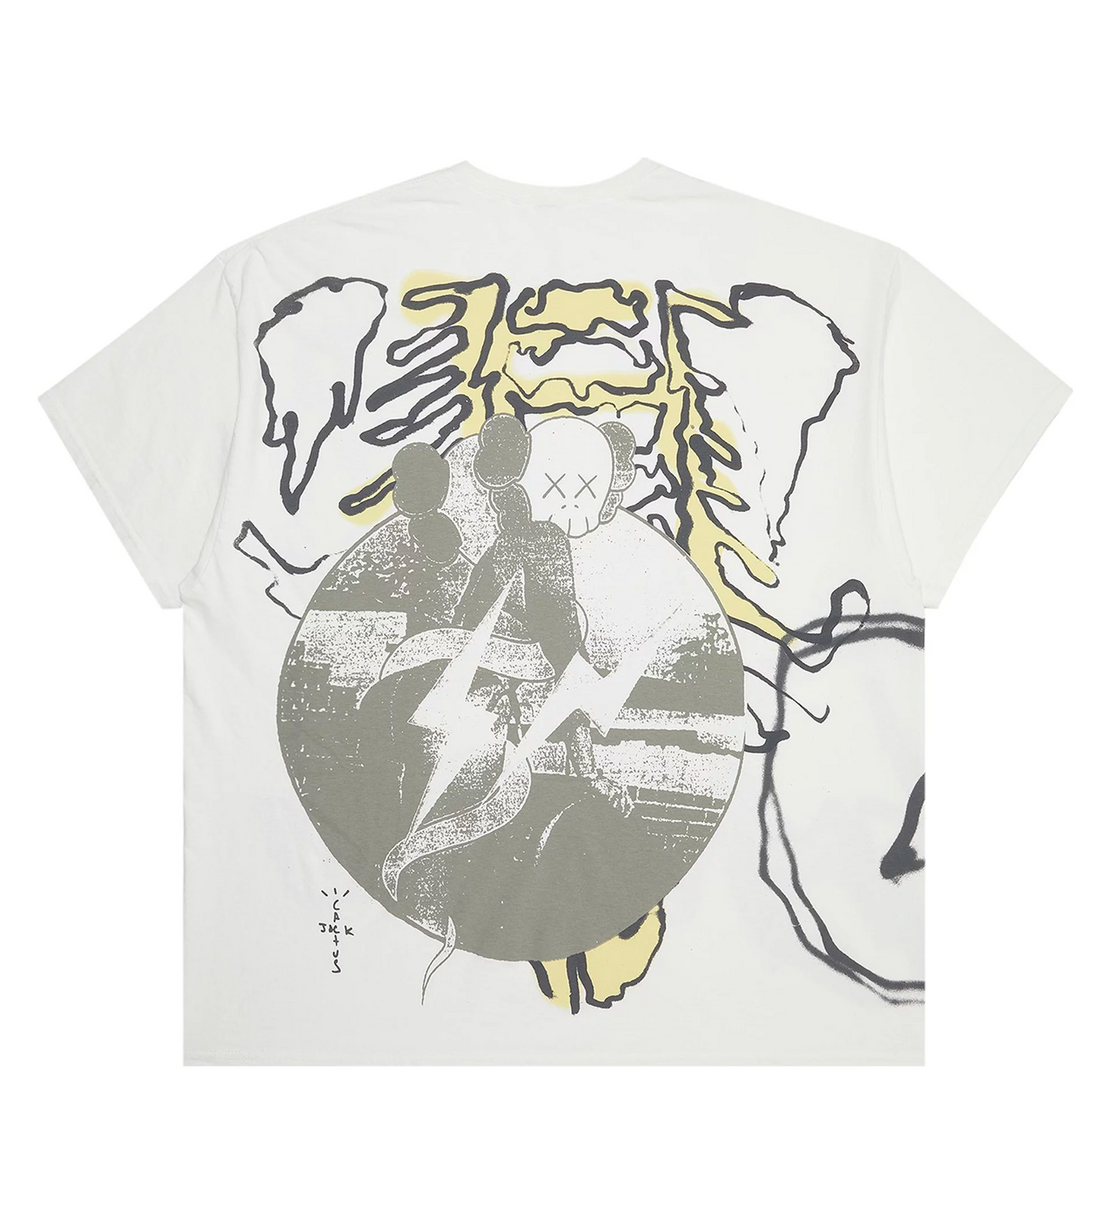 Travis Scott x Jordan x Fragment T-Shirt - Shop Now